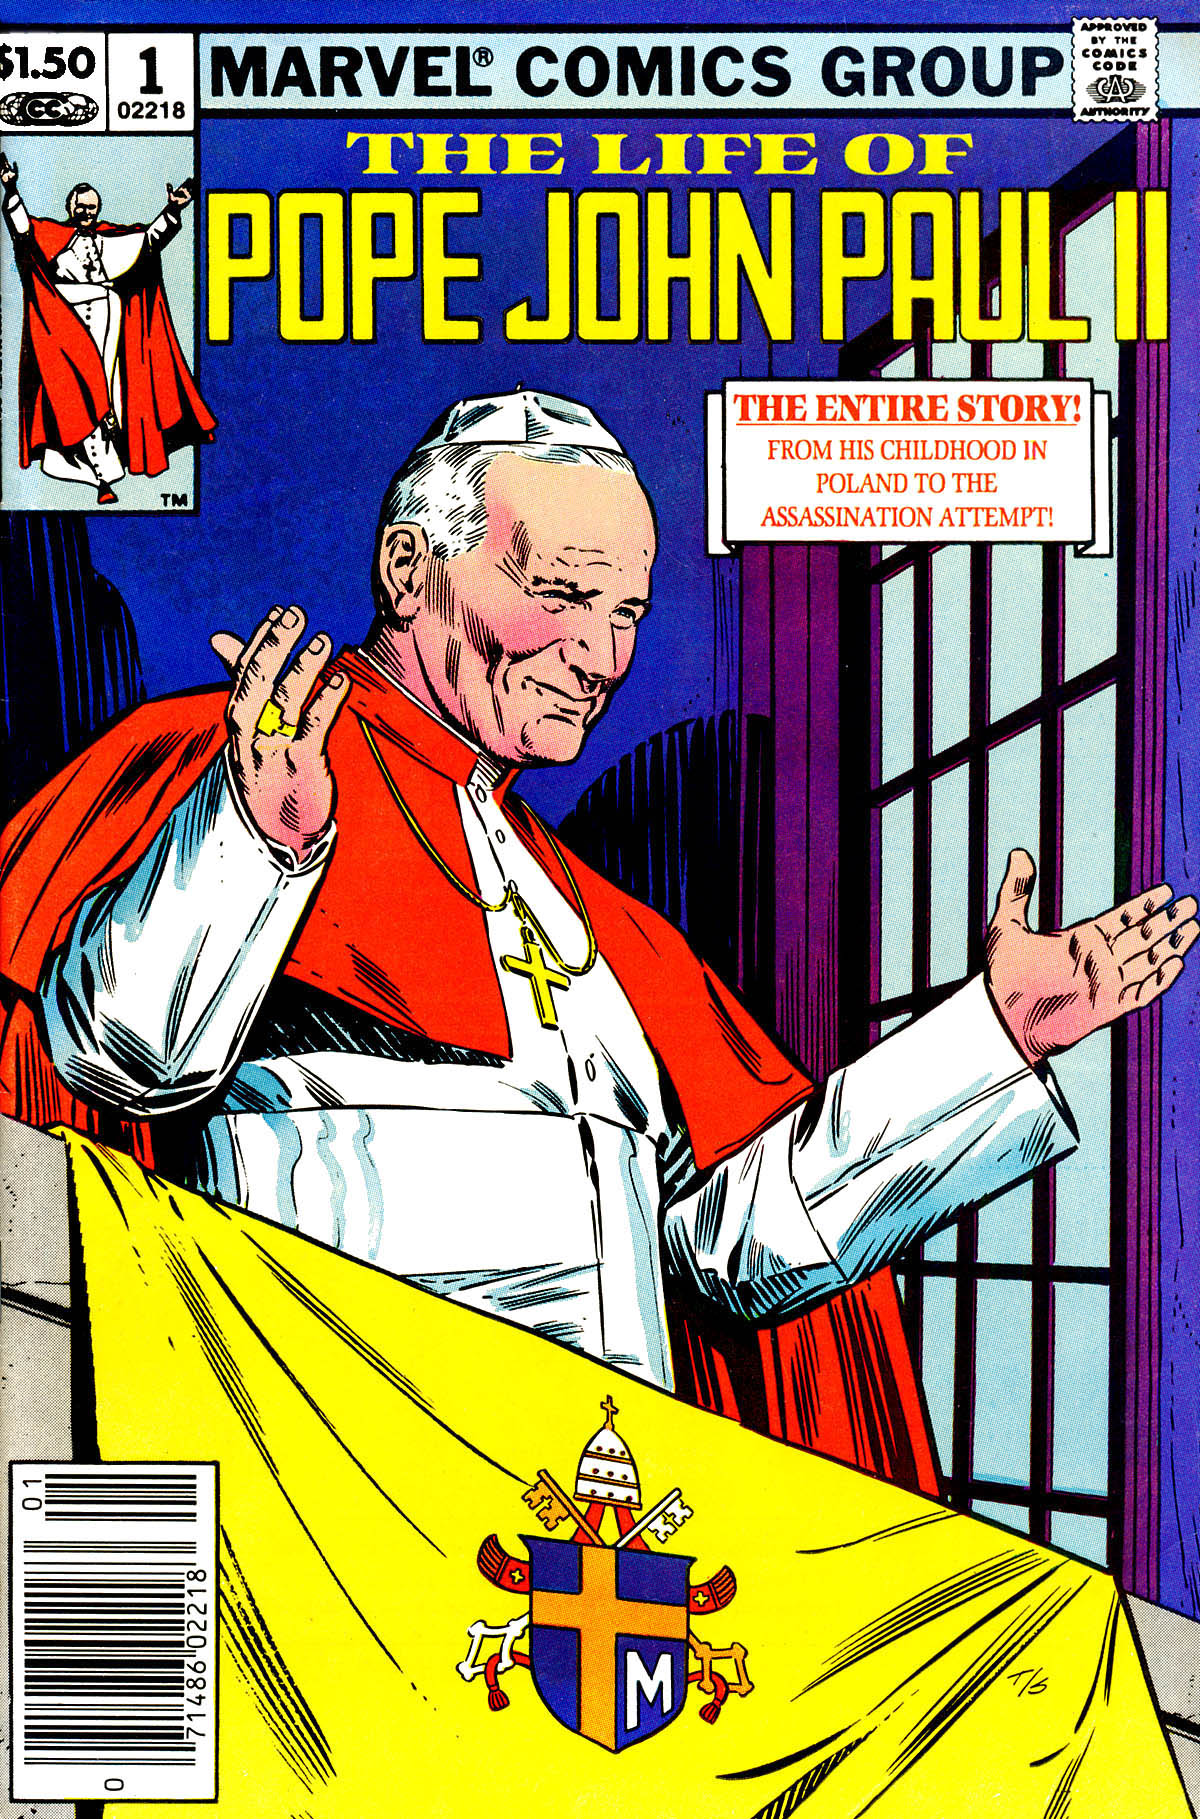 Read online The Life of Pope John Paul II comic -  Issue # Full - 1